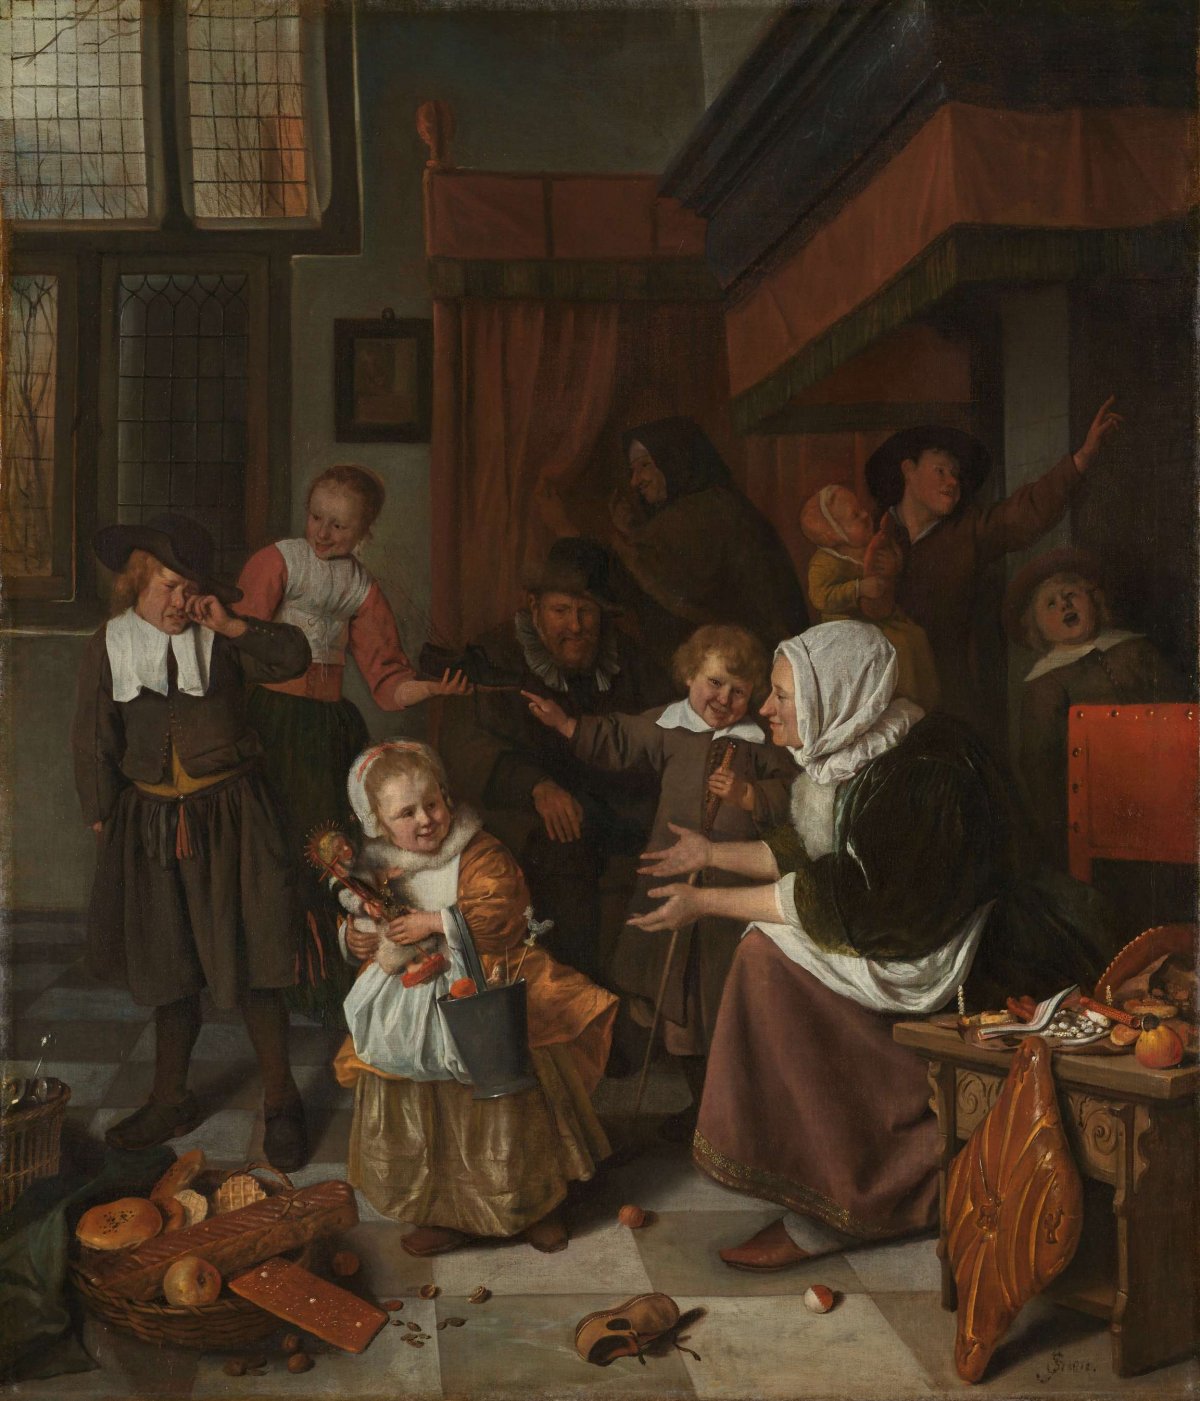 The Feast of St Nicholas, Jan Havicksz. Steen, 1665 - 1668